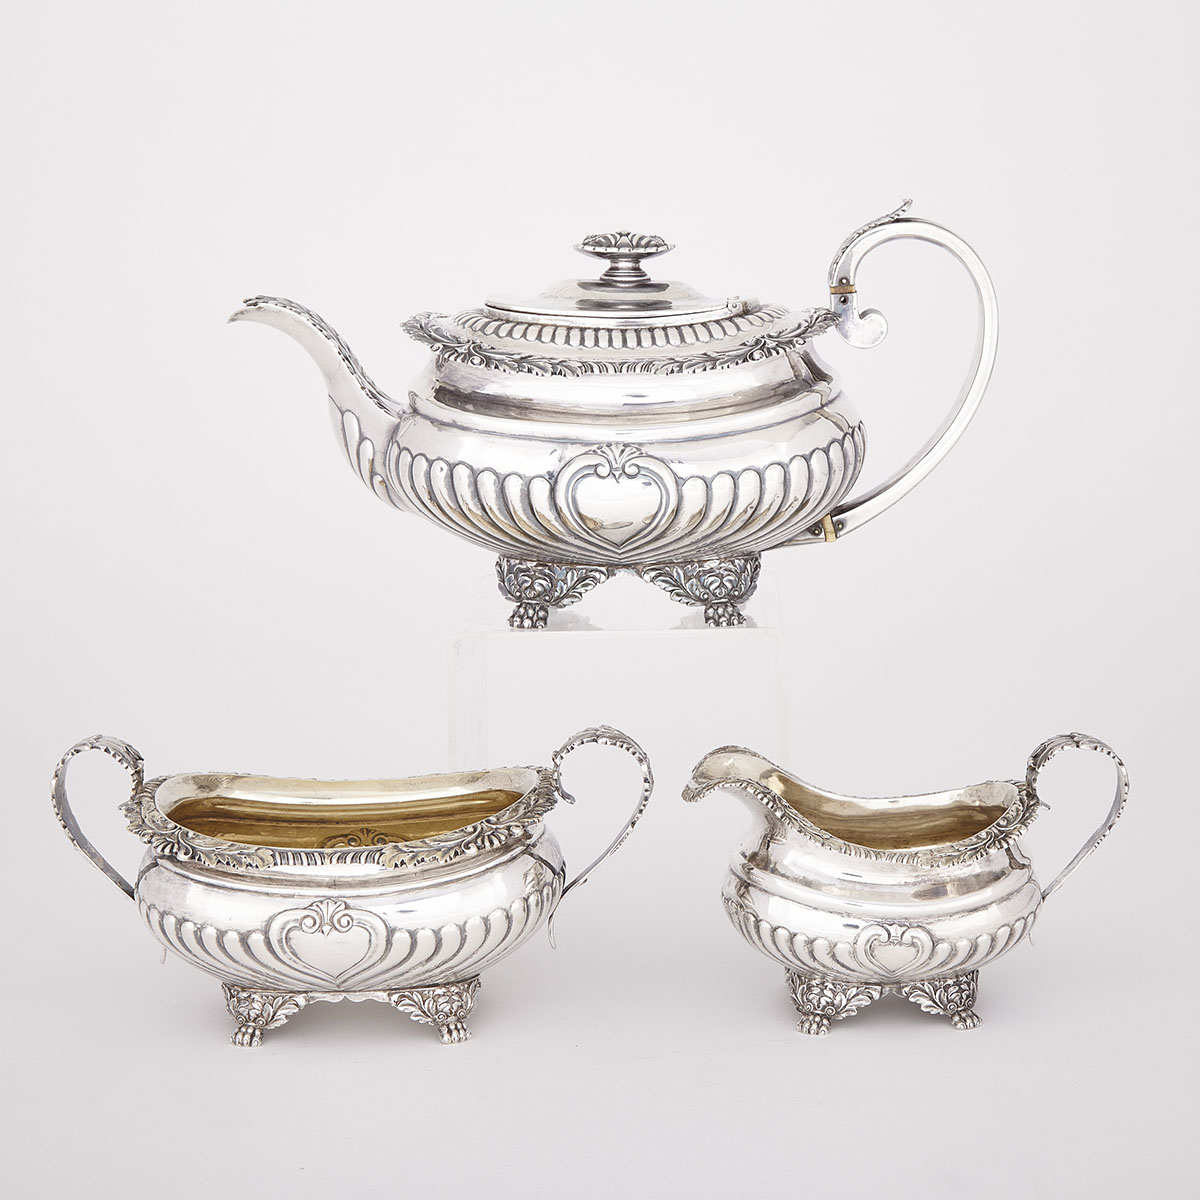 George III Silver Tea Service, Joseph Angell I, London, 1819/20